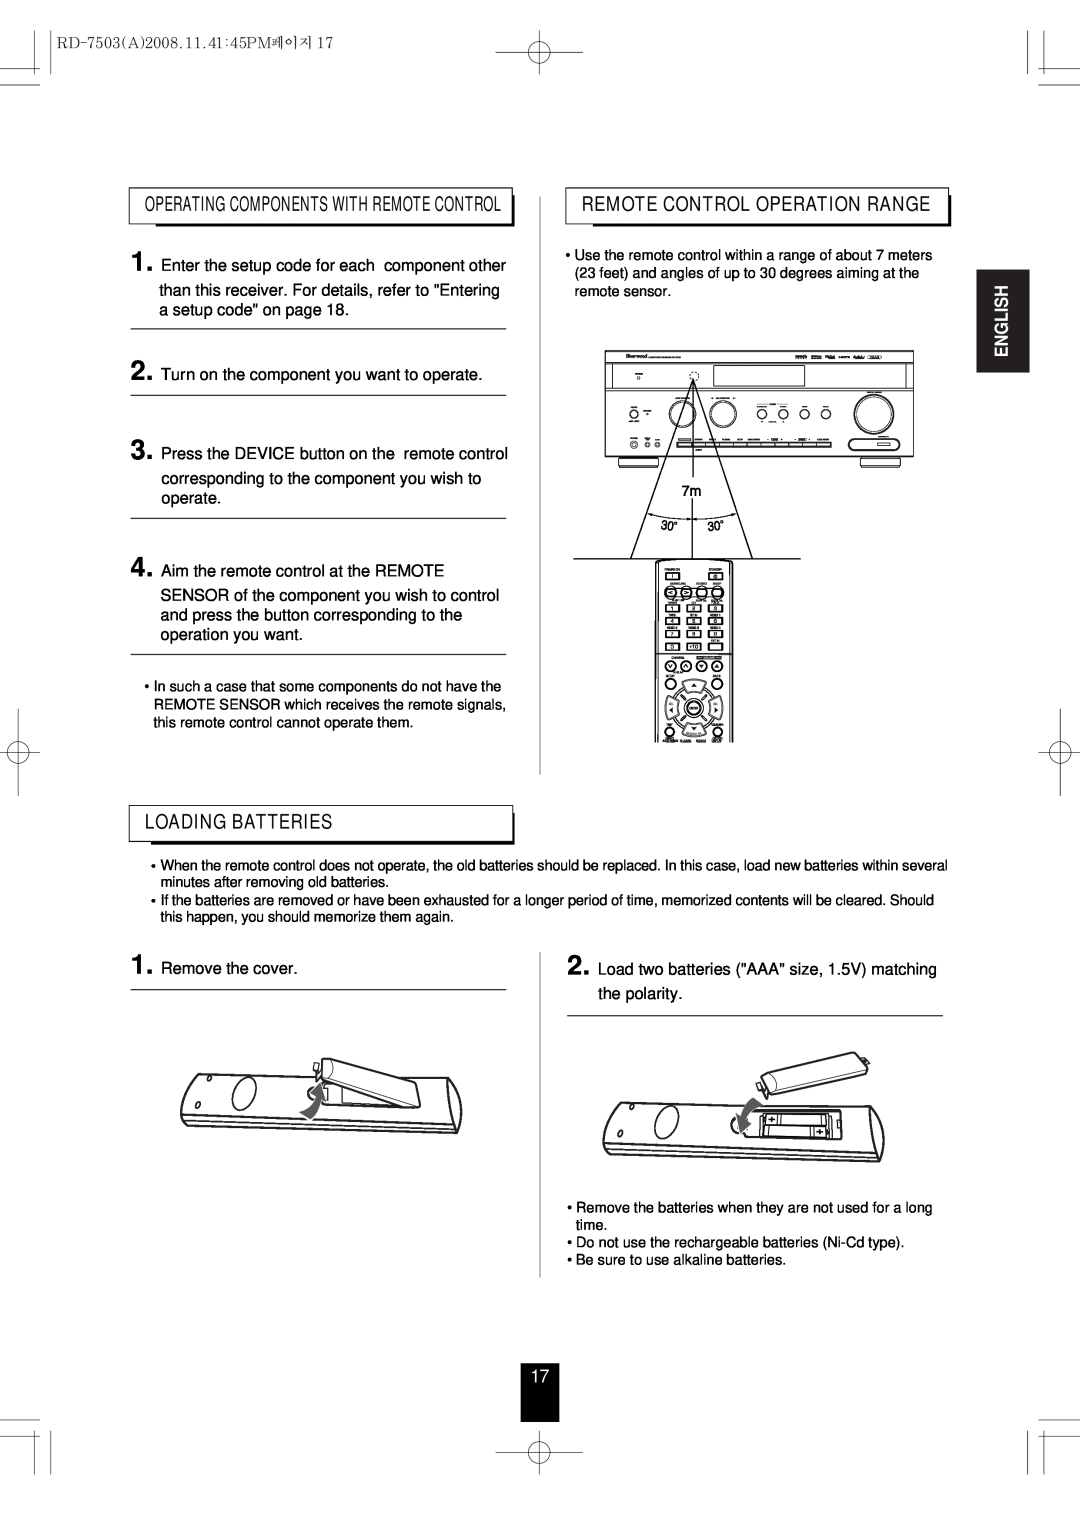 Sherwood RD-7503 manual Loading Batteries, Remote Control Operation Range, English 